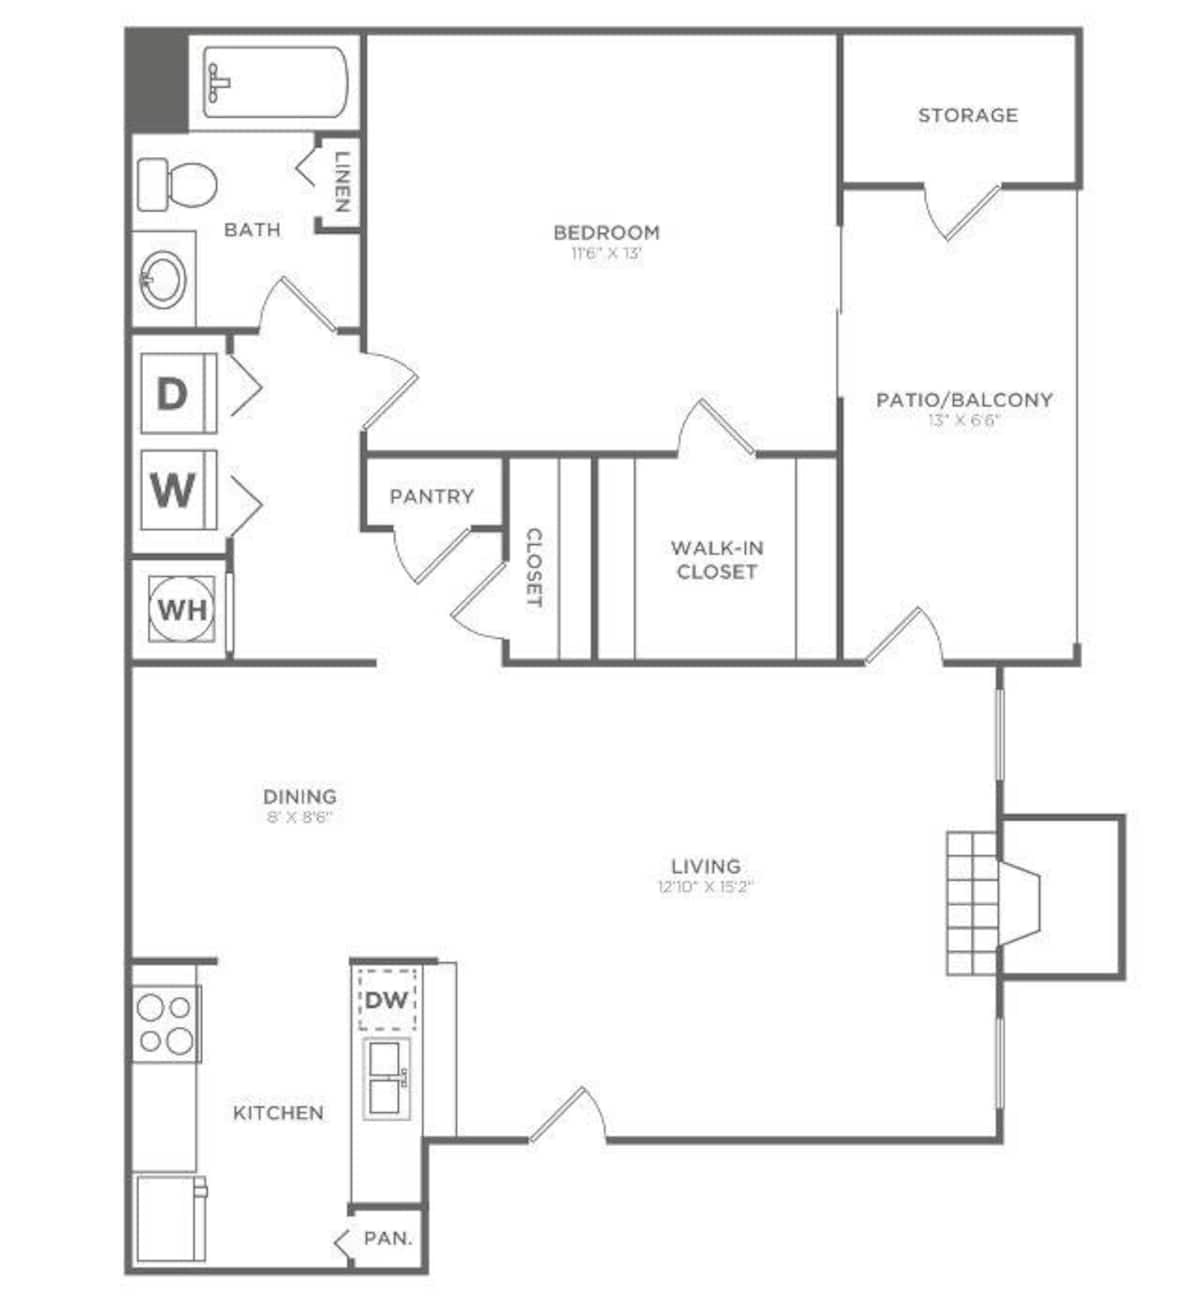 Floorplan diagram for One Bedroom One Bath (850 SF), showing 1 bedroom